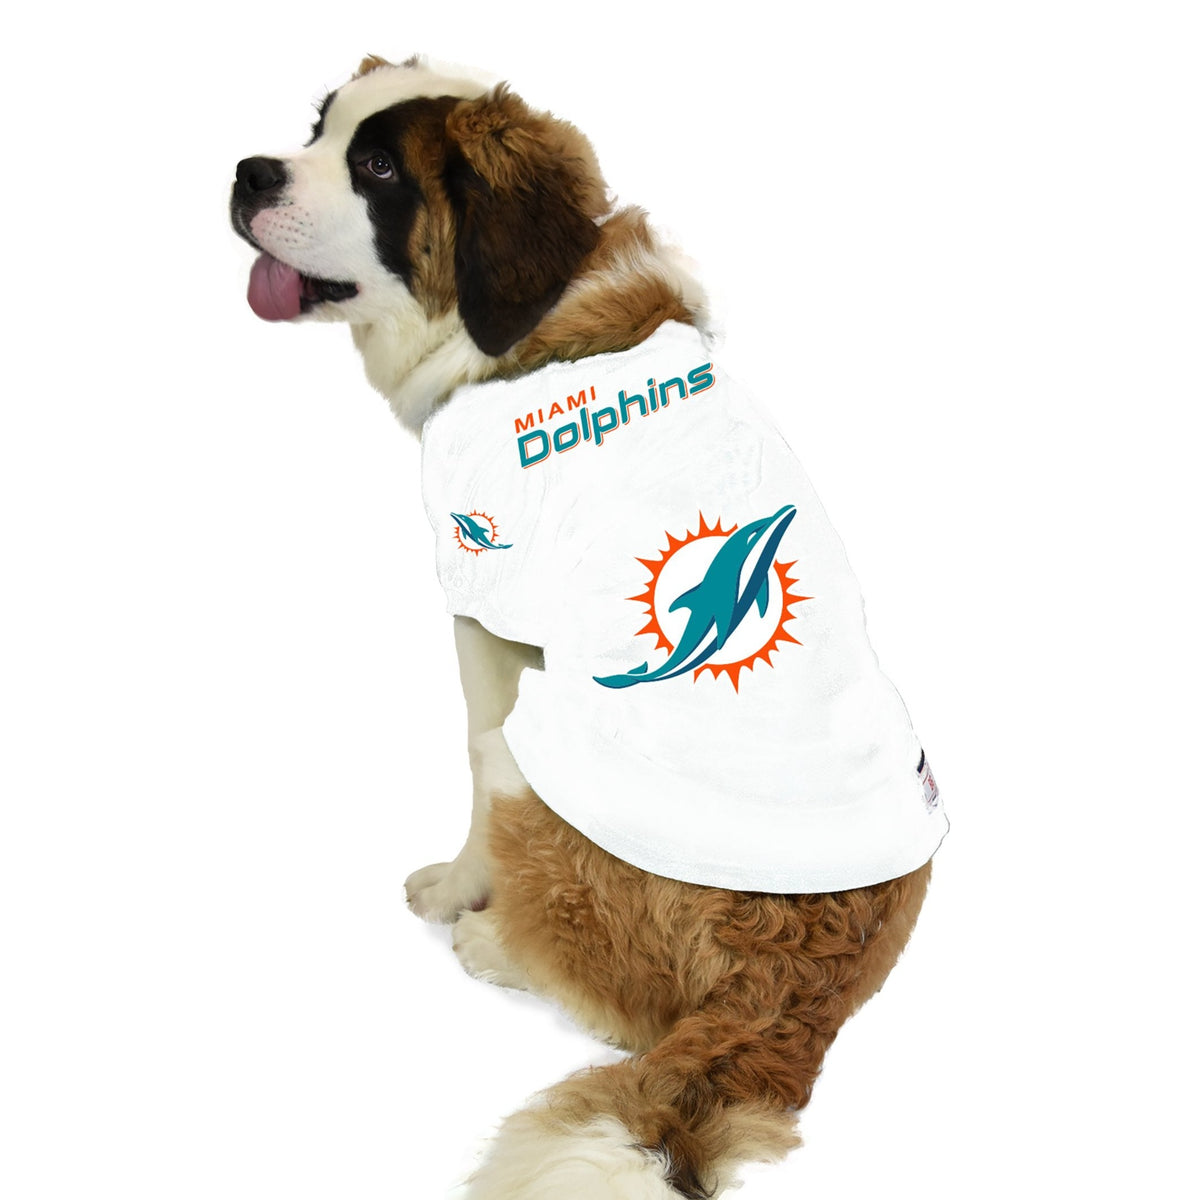 : NFL Miami Dolphins Dog Jersey, Size: Medium. Best